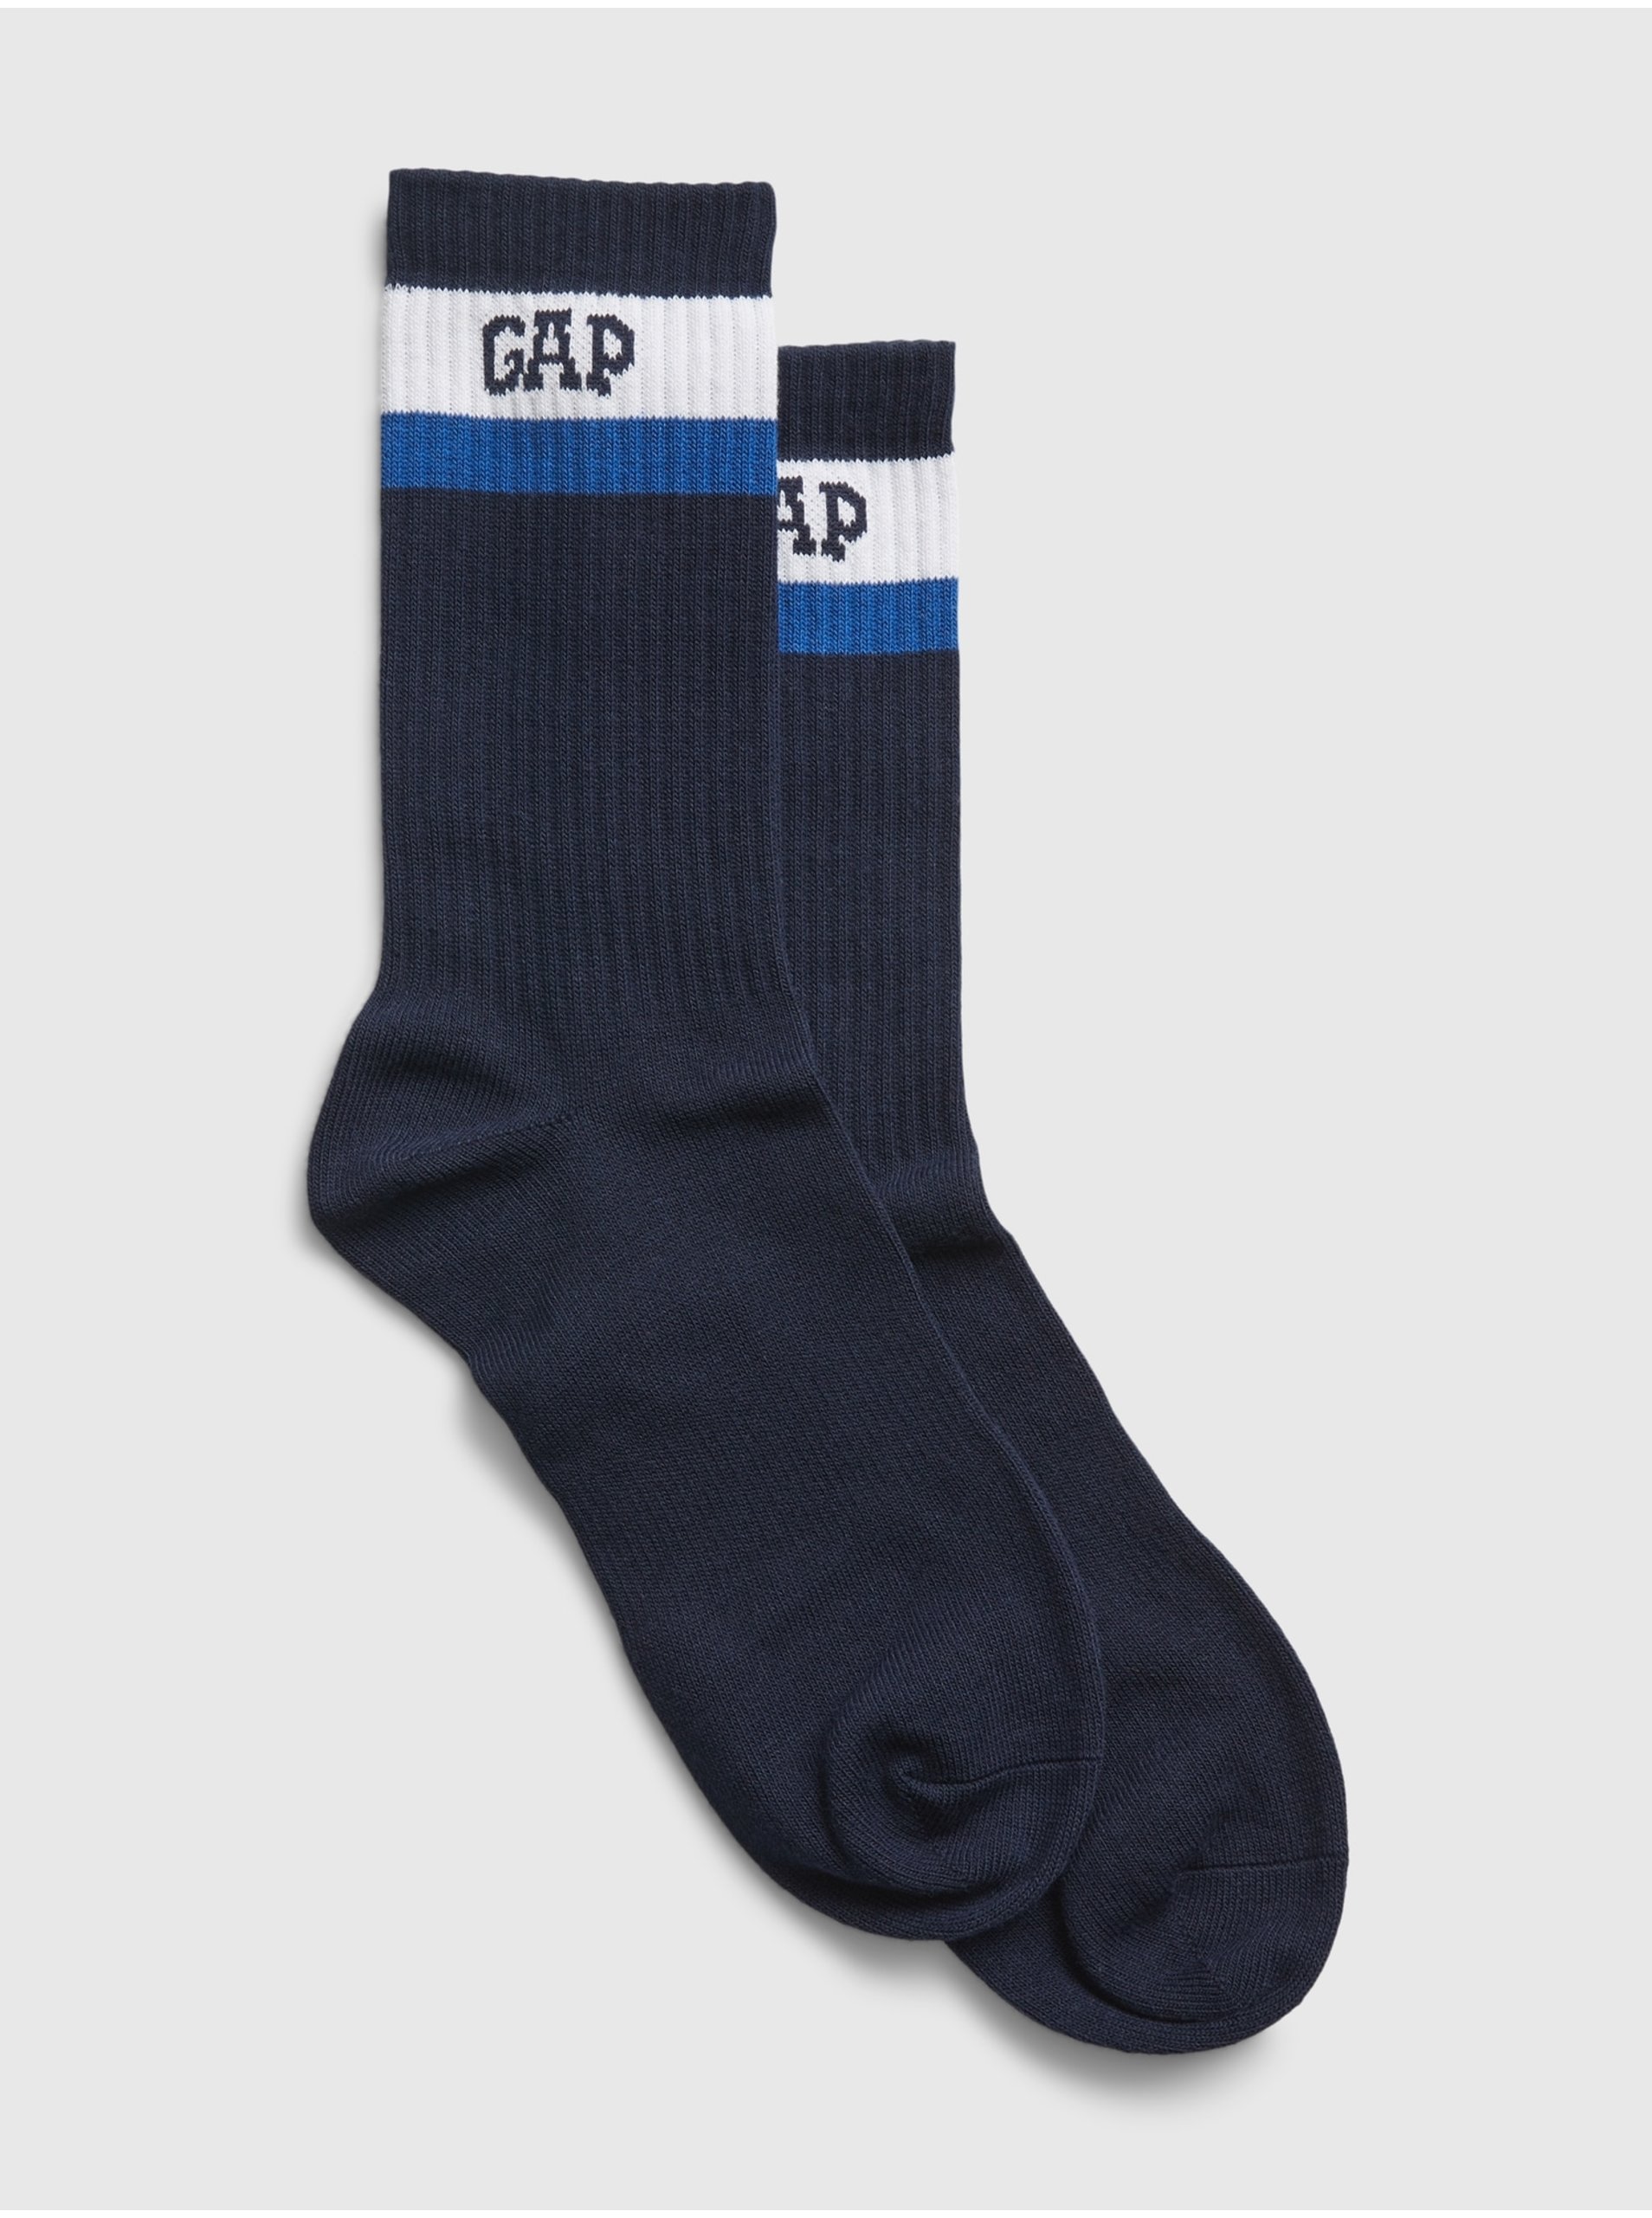 Lacno Tmavomodré pánske vysoké ponožky GAP athletic